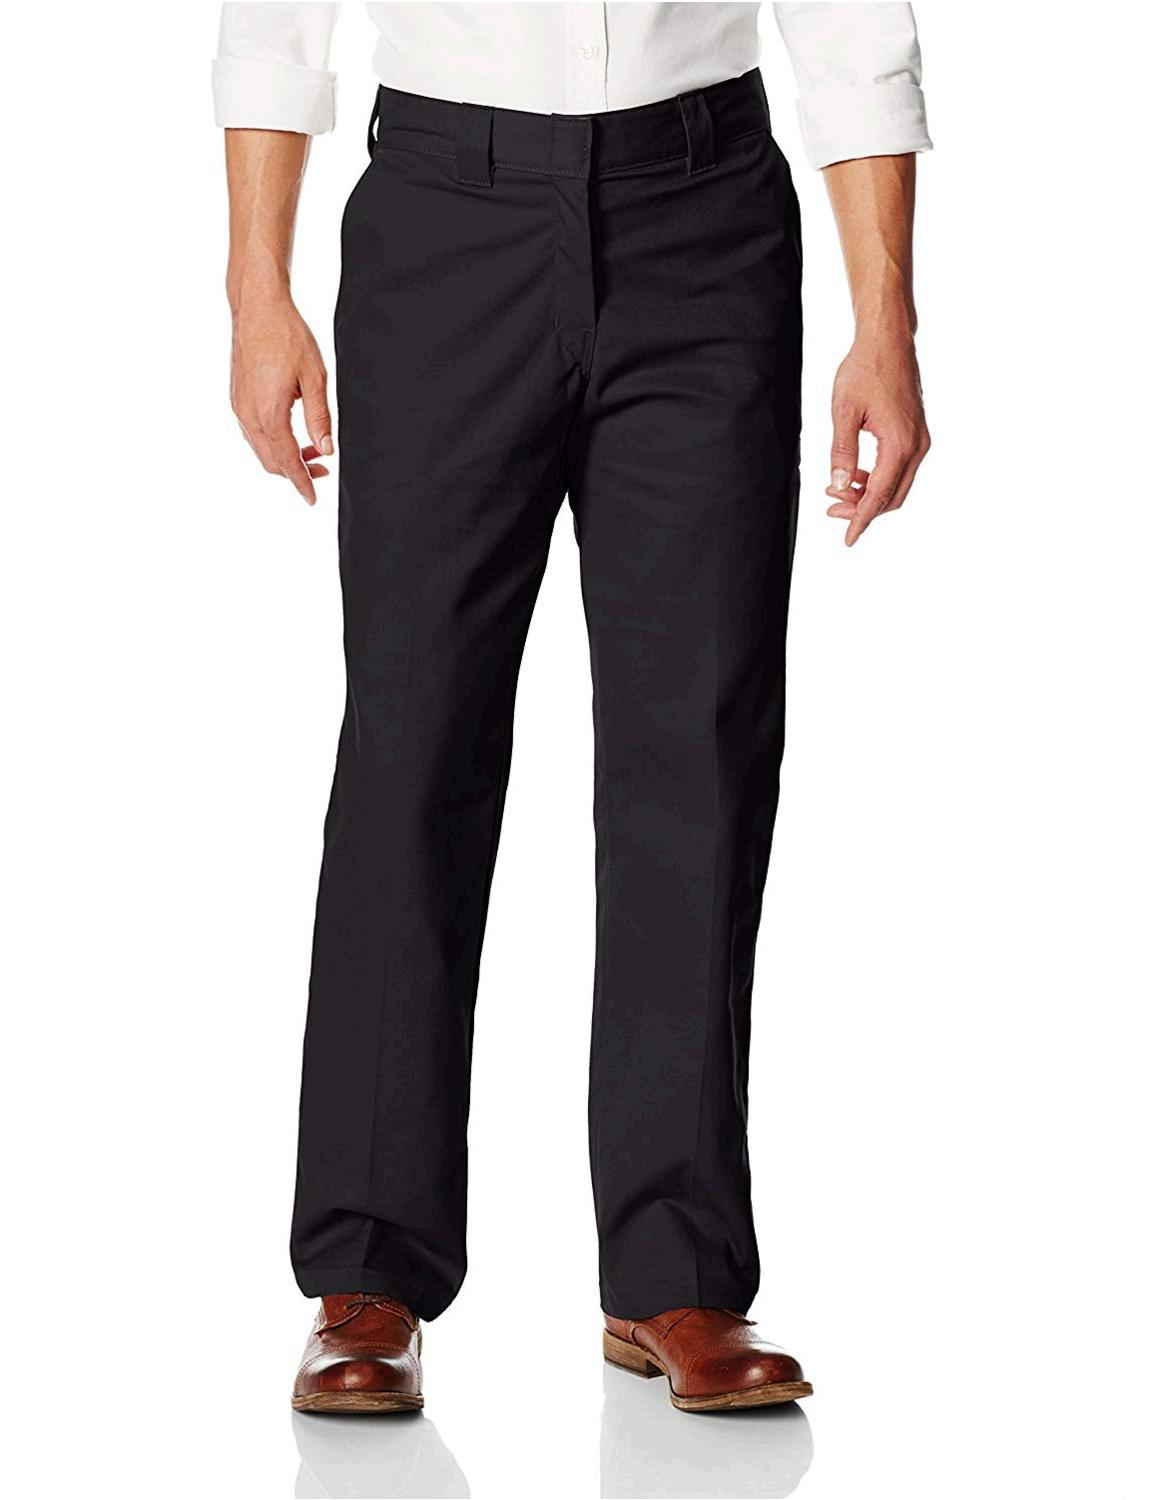 Dickies Men's Regular Fit Twill Work Pant, Black, 42x30, Black, Size ...